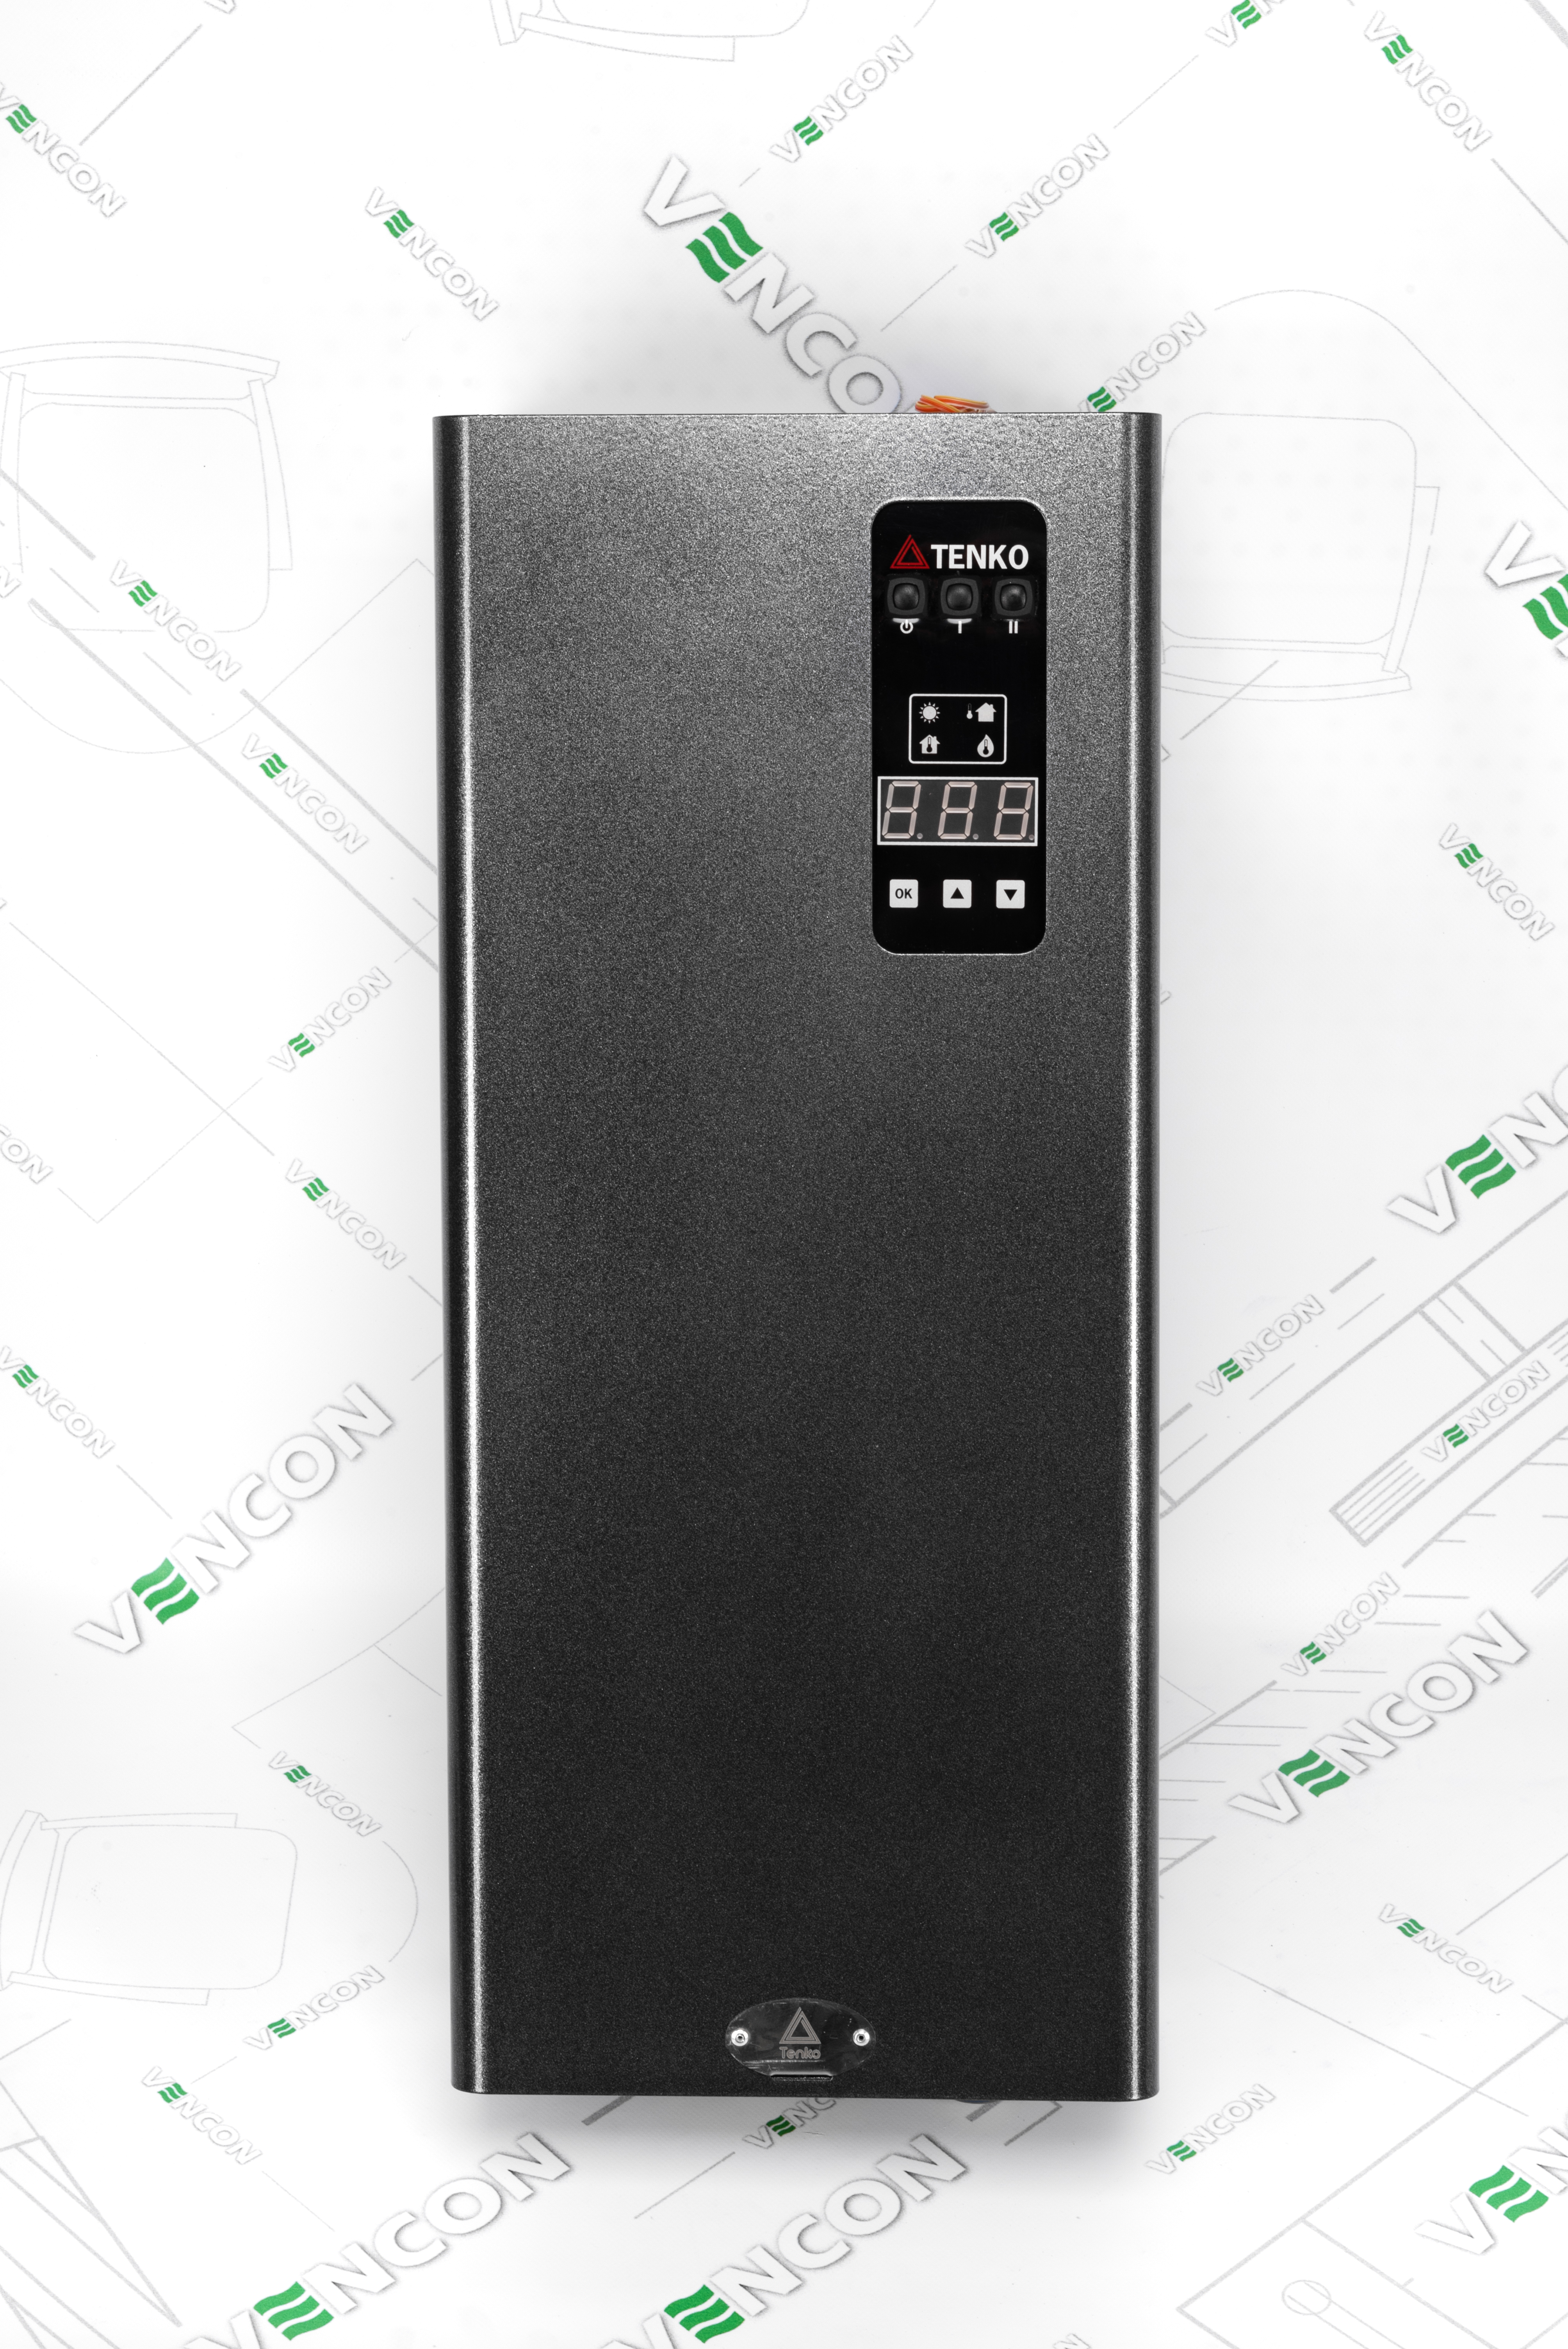 Электрический котел Tenko Digital Standart 9 380 цена 13048.00 грн - фотография 2